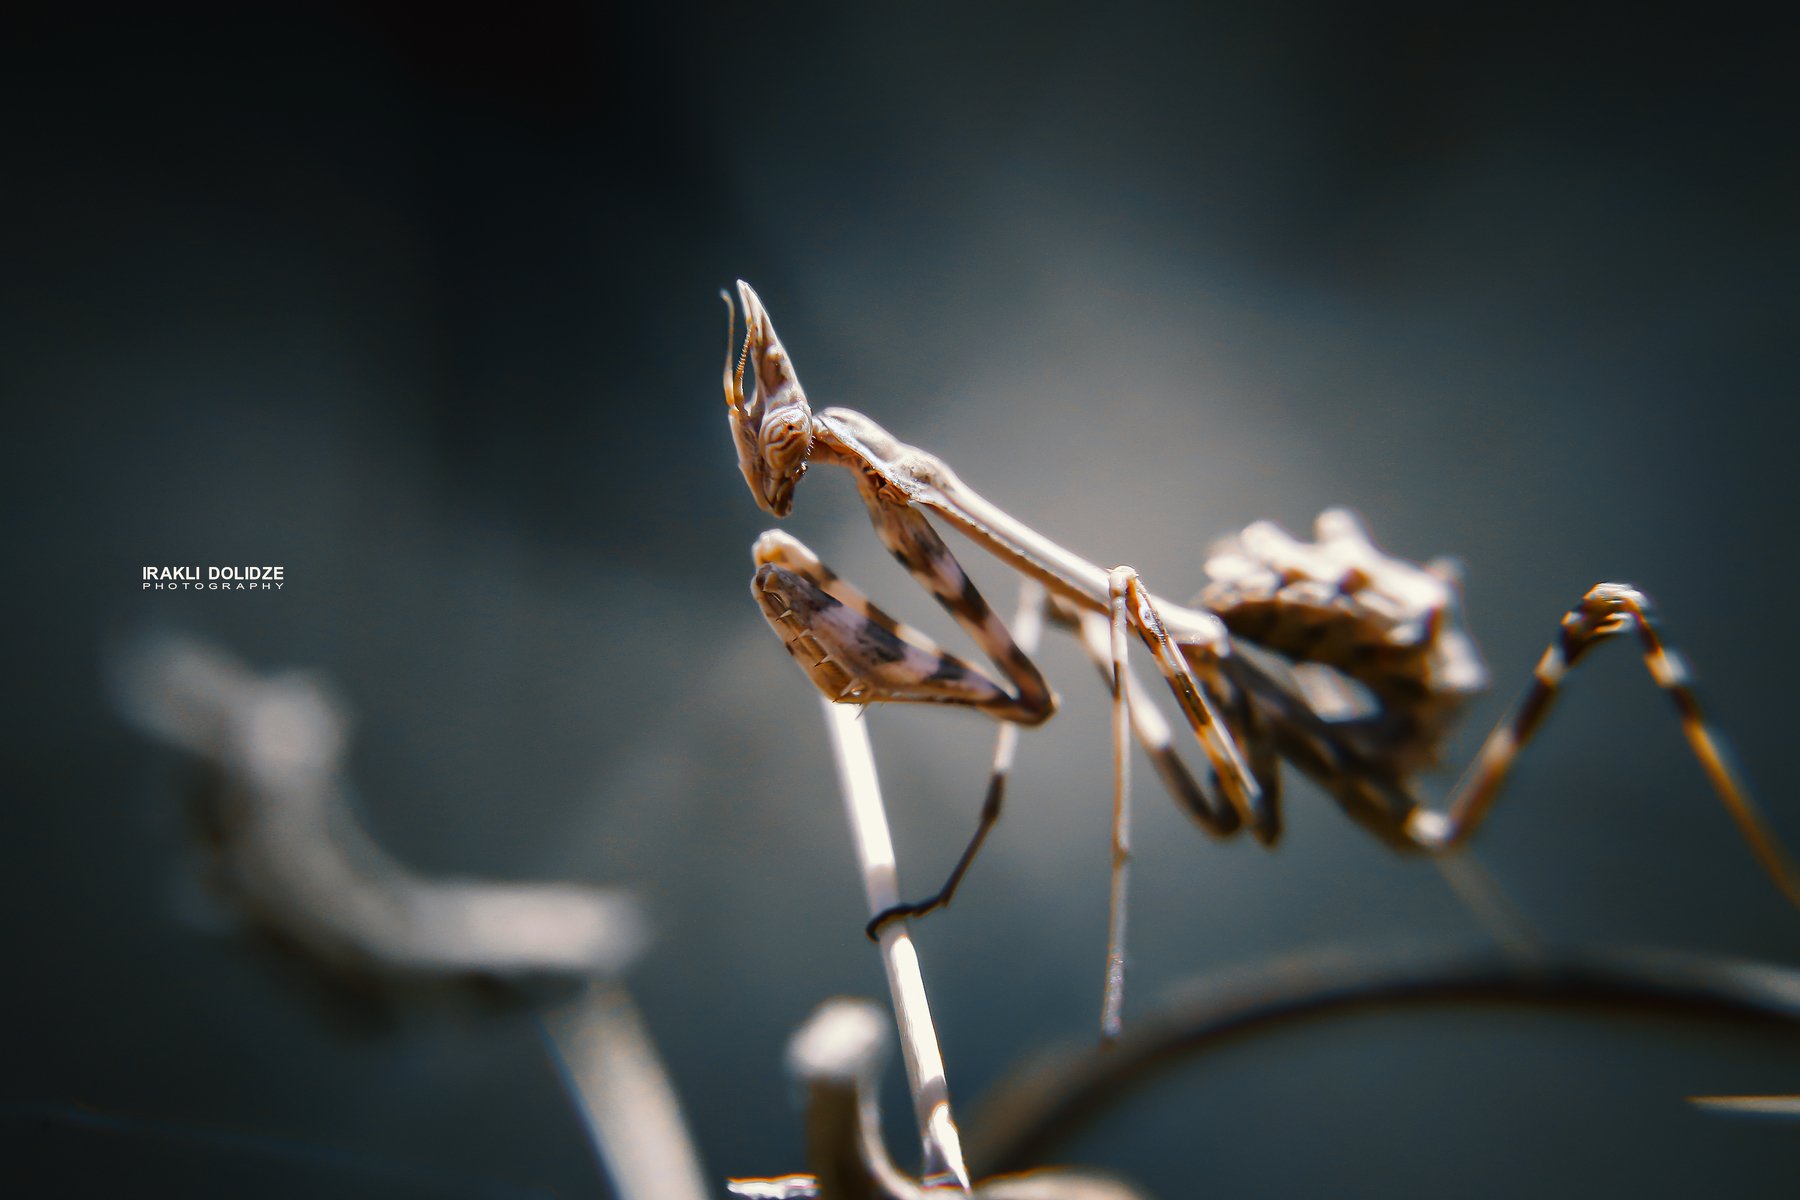 mantis religiosa, macro, close-up, outdoor, photography, ირაკლი დოლიძე